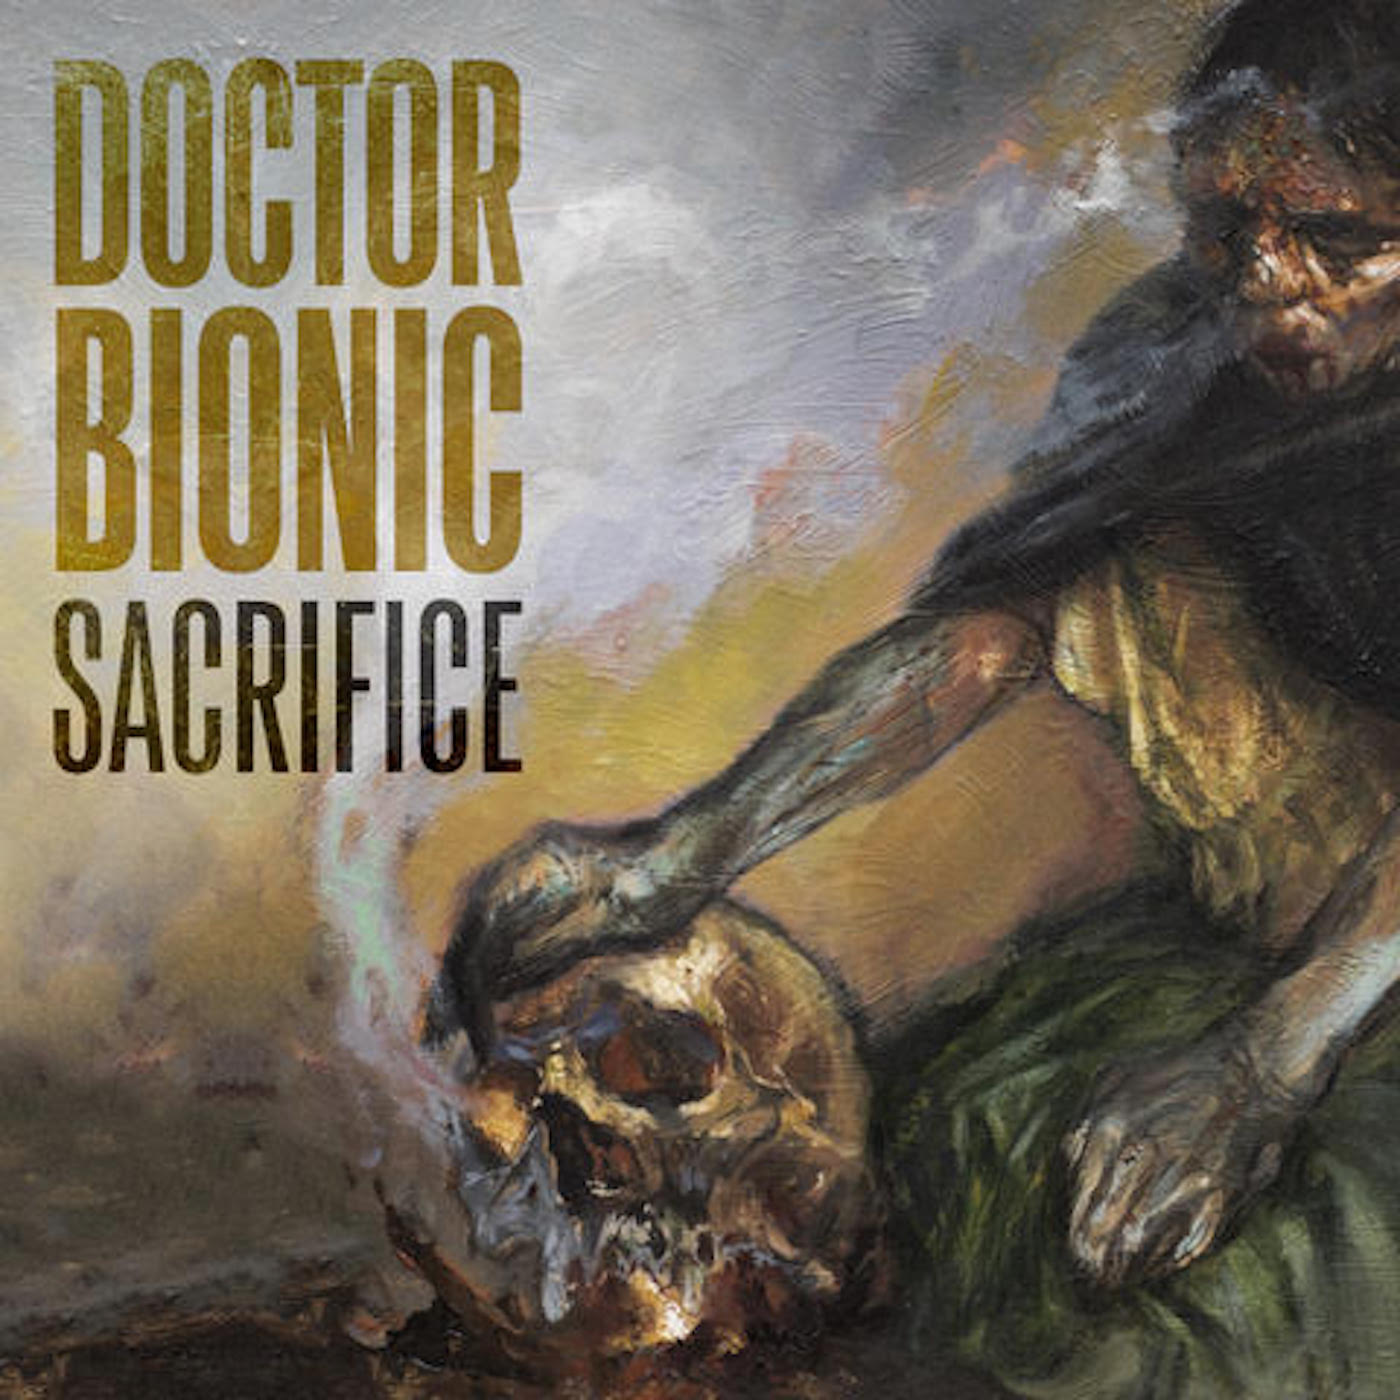 Doctor Bionic "Sacrifice" LP